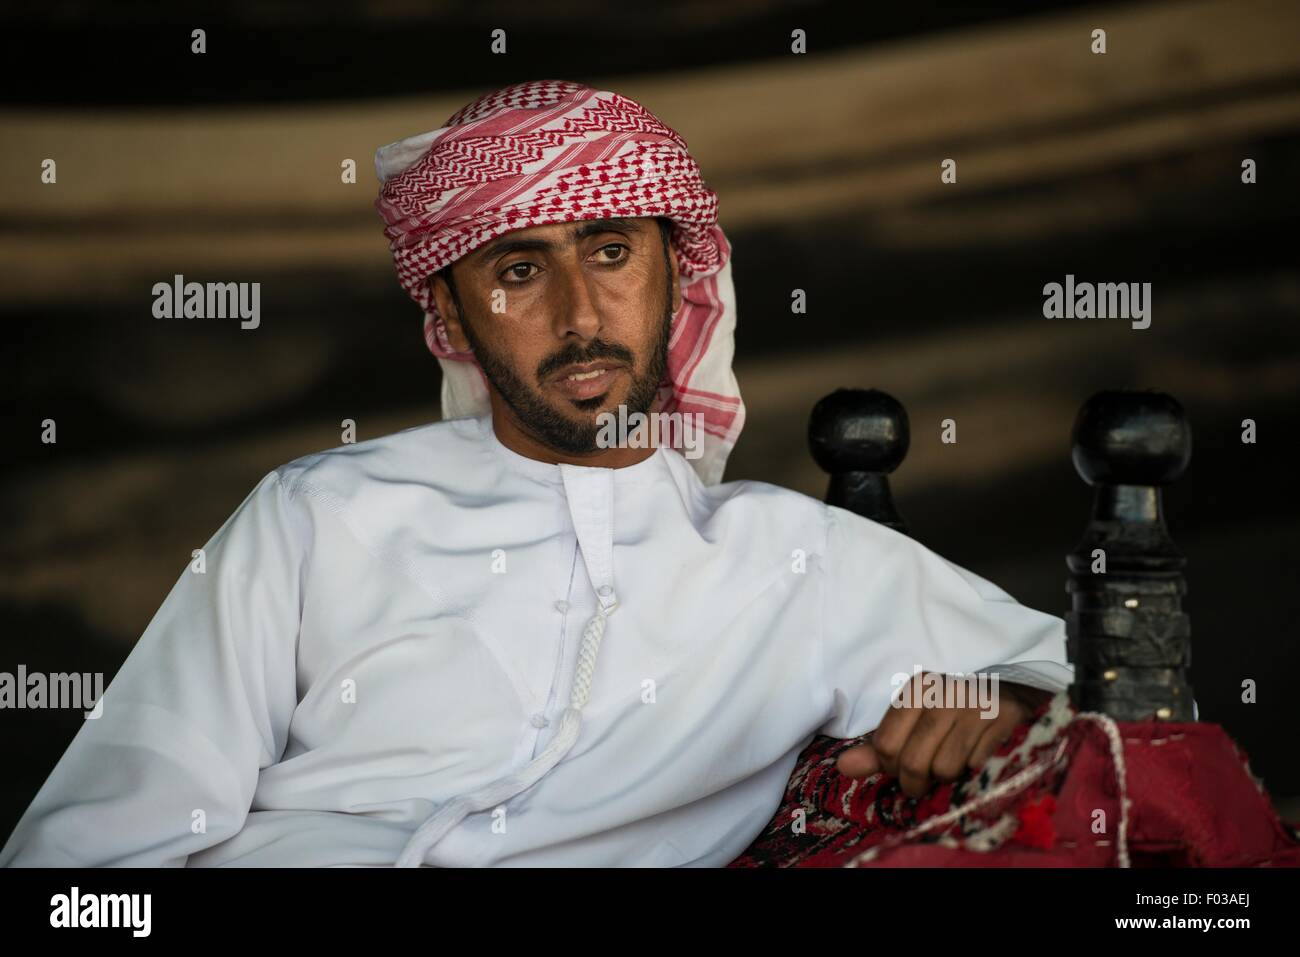 Omani man in traditional dress, Muscat, Oman. Stock Photo